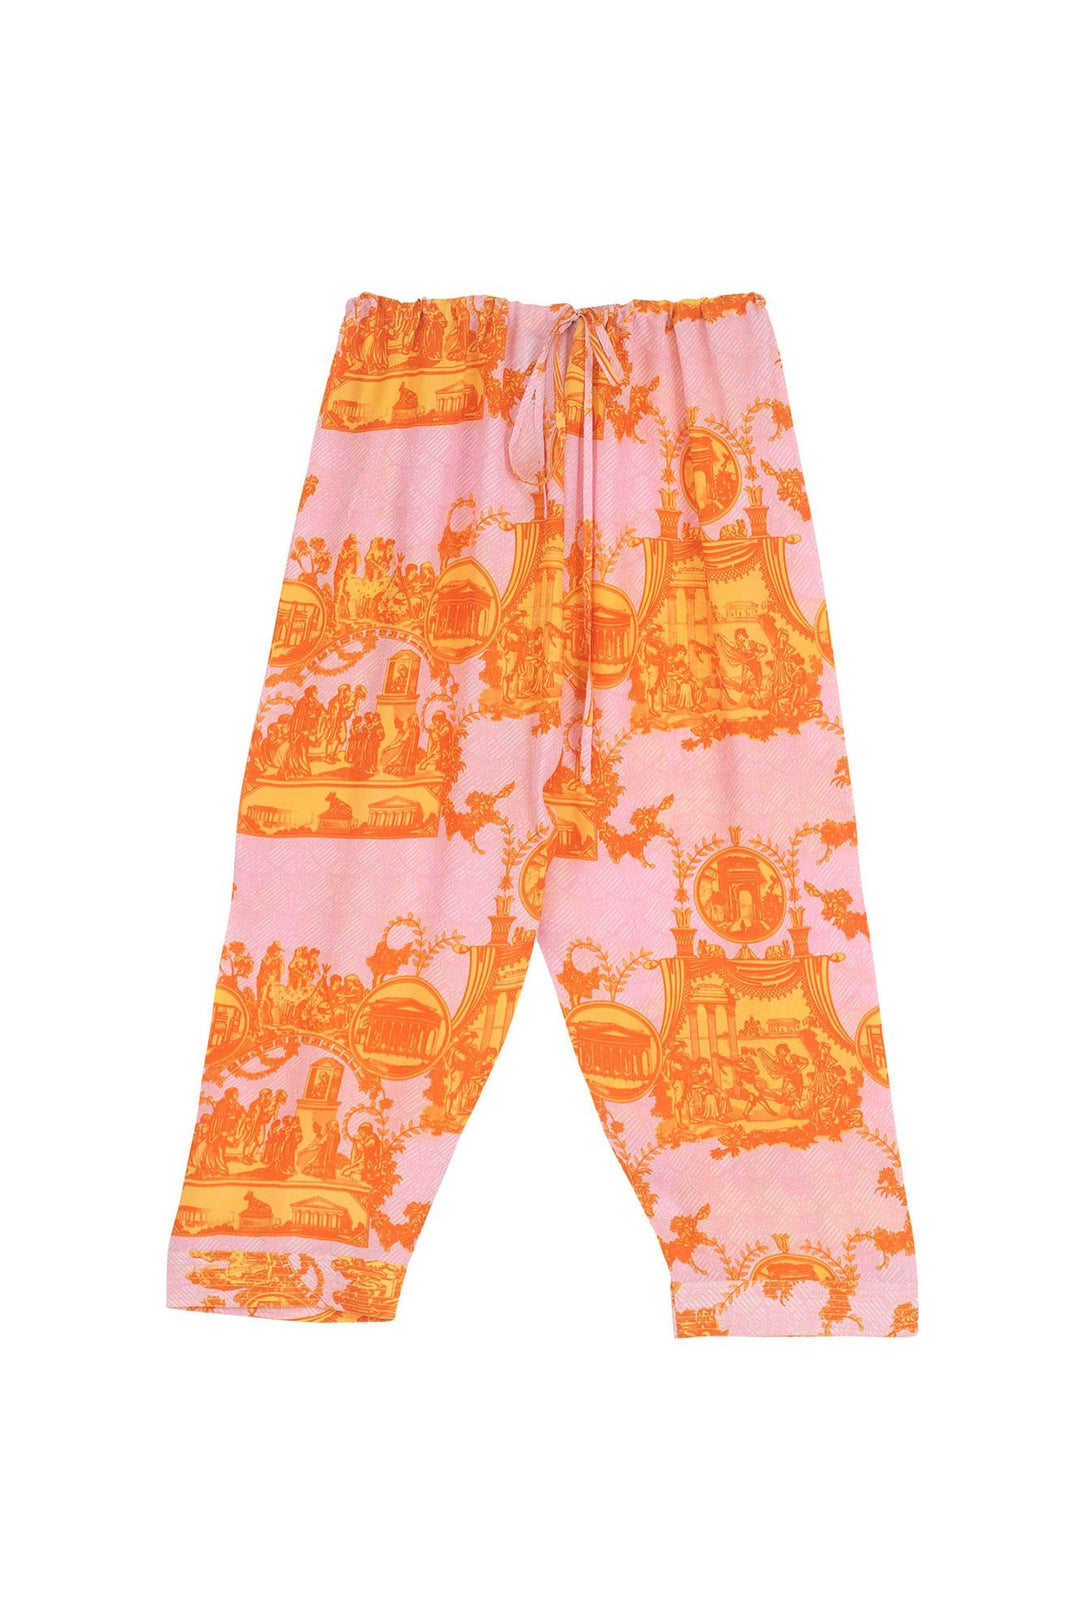 Ancient Columns Orange Crepe Lounge Pants - One Hundred Stars